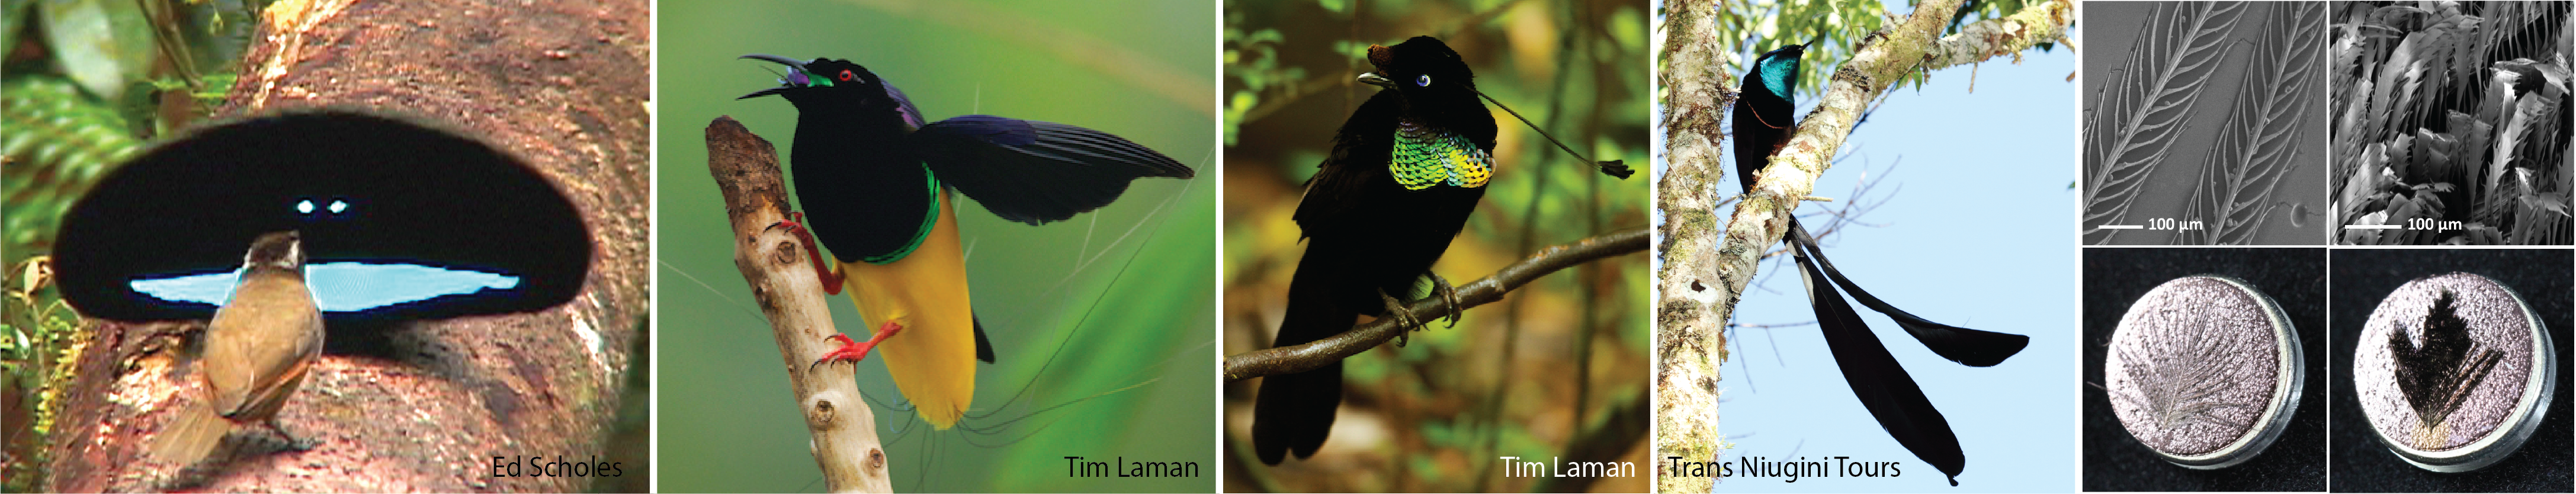 Birds of Paradise have super black color